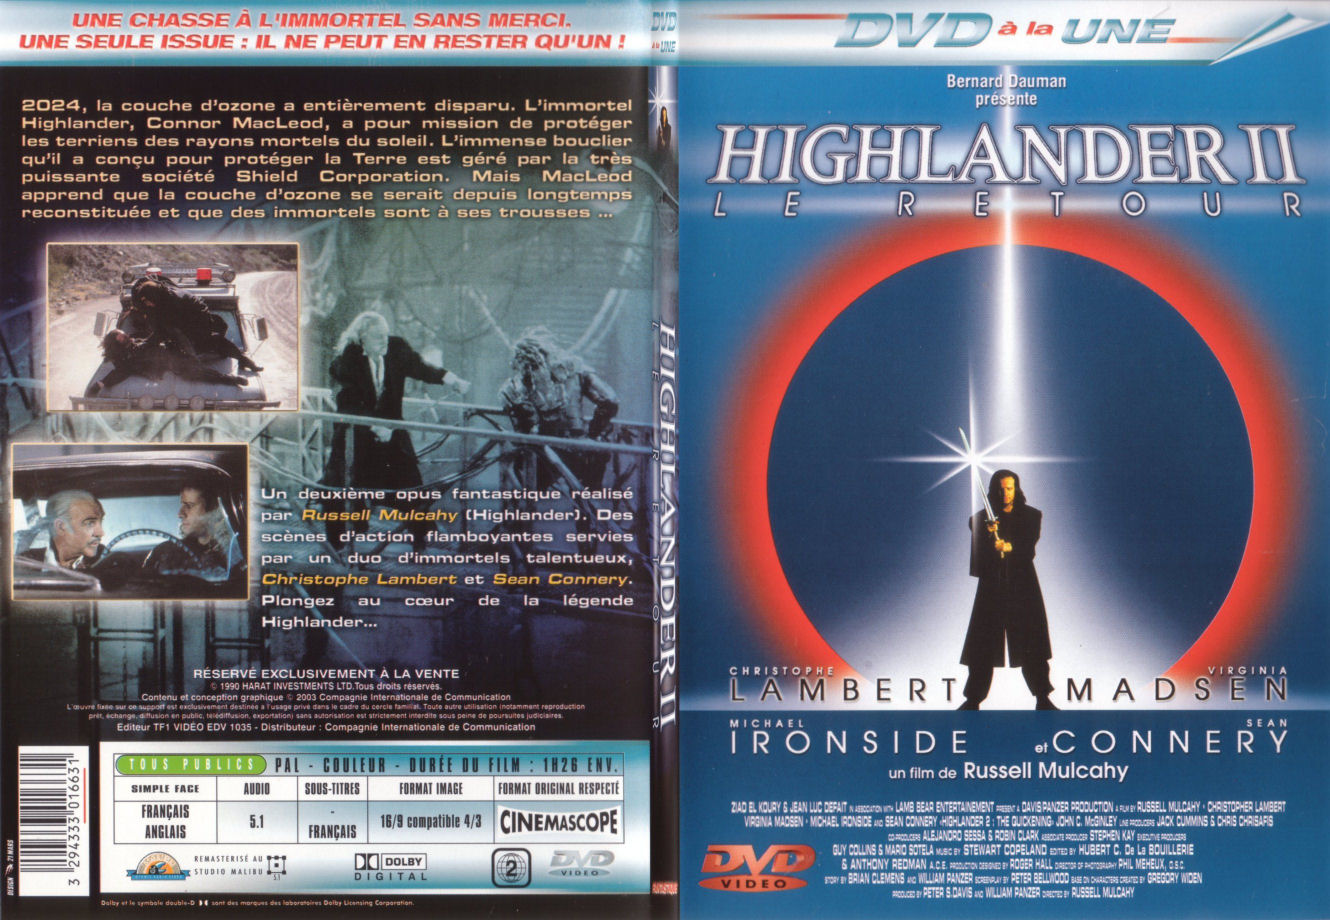 Jaquette DVD de Highlander II - SLIM - Cinéma Passion1330 x 920